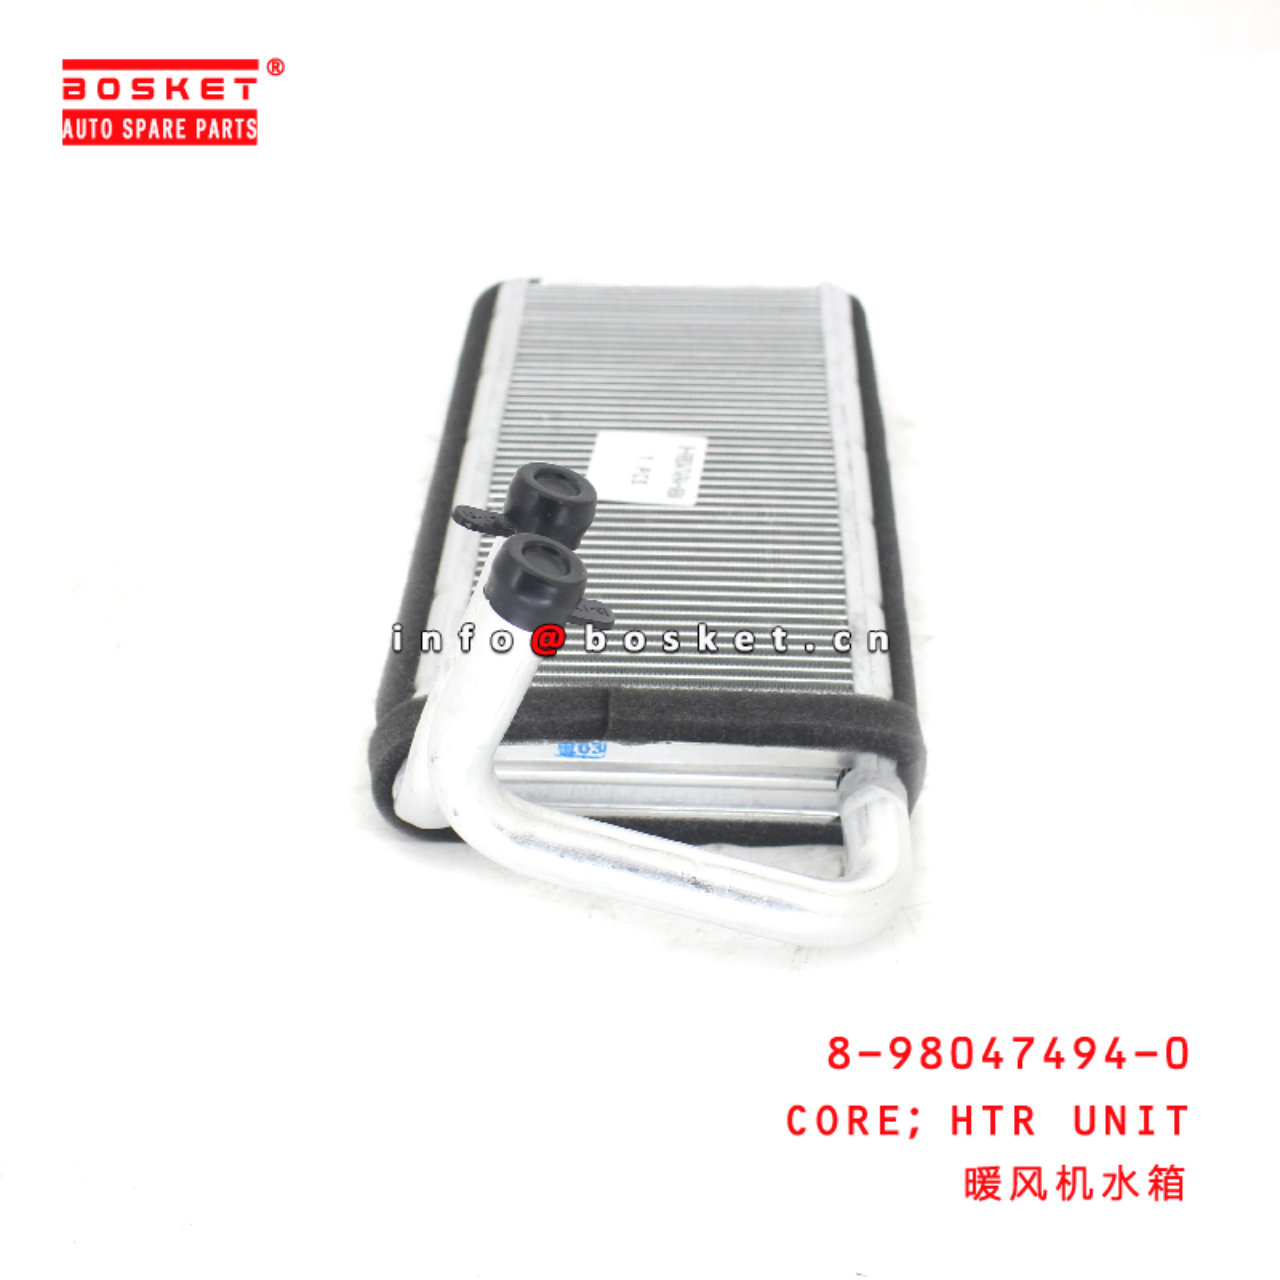 8-98047494-0 Heater Unit Core suitable for ISUZU 700P 4HK1 8980474940